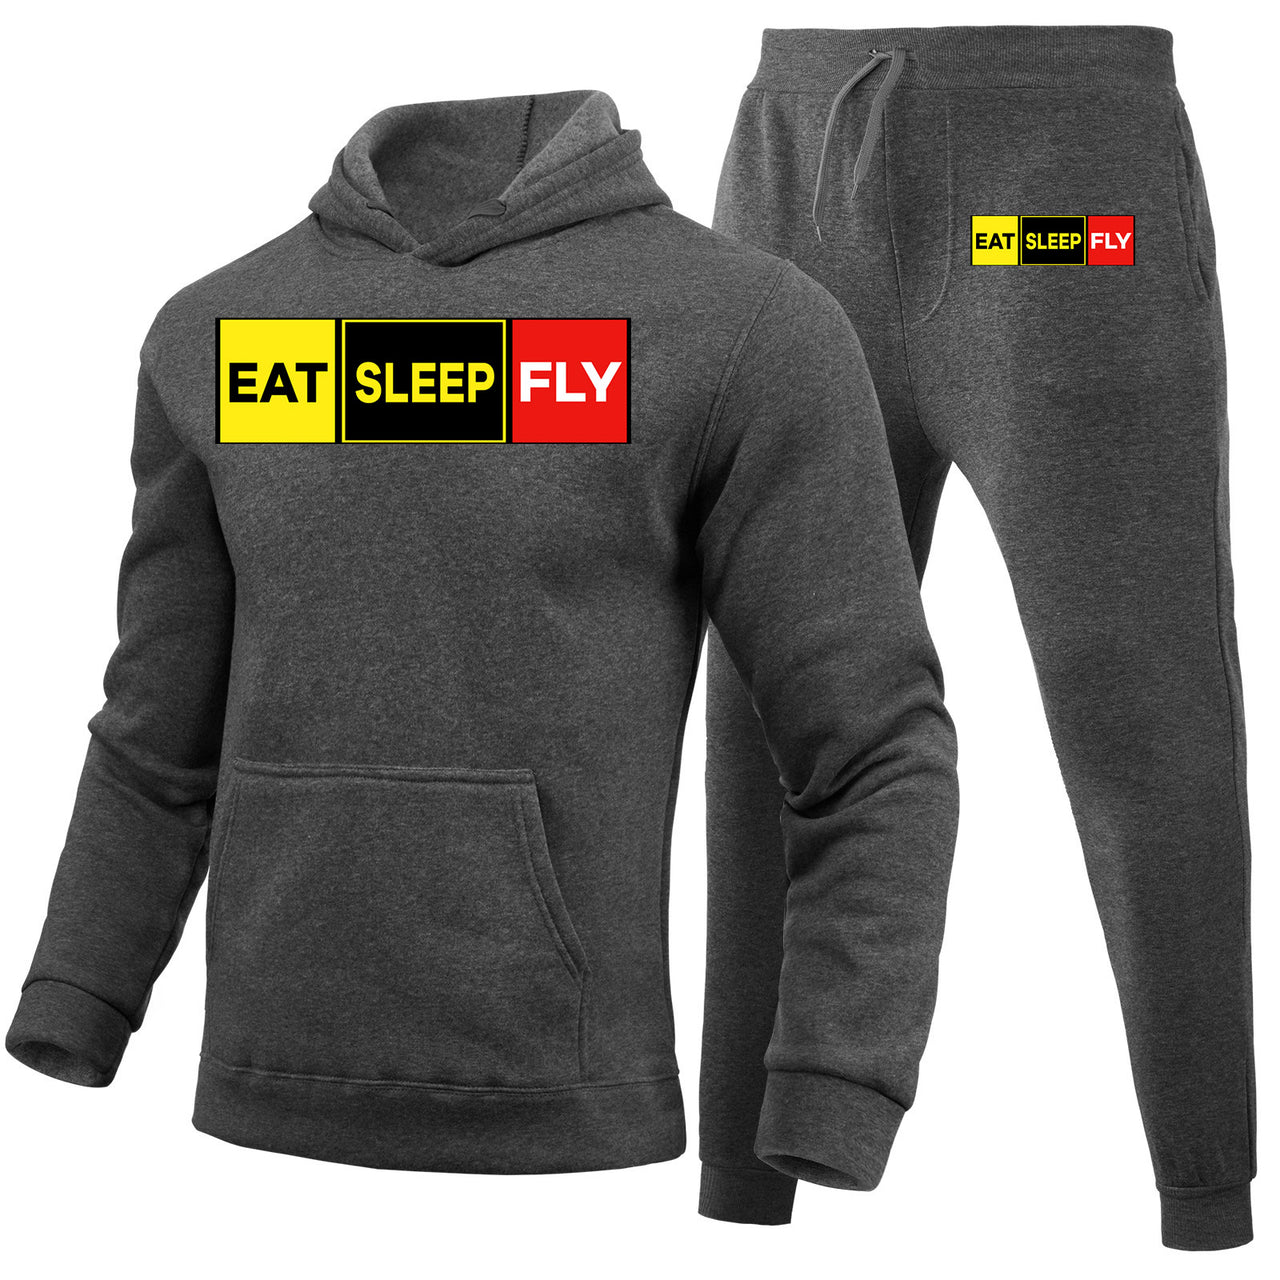 Eat Sleep Fly (Colourful) Designed Hoodies & Sweatpants Set